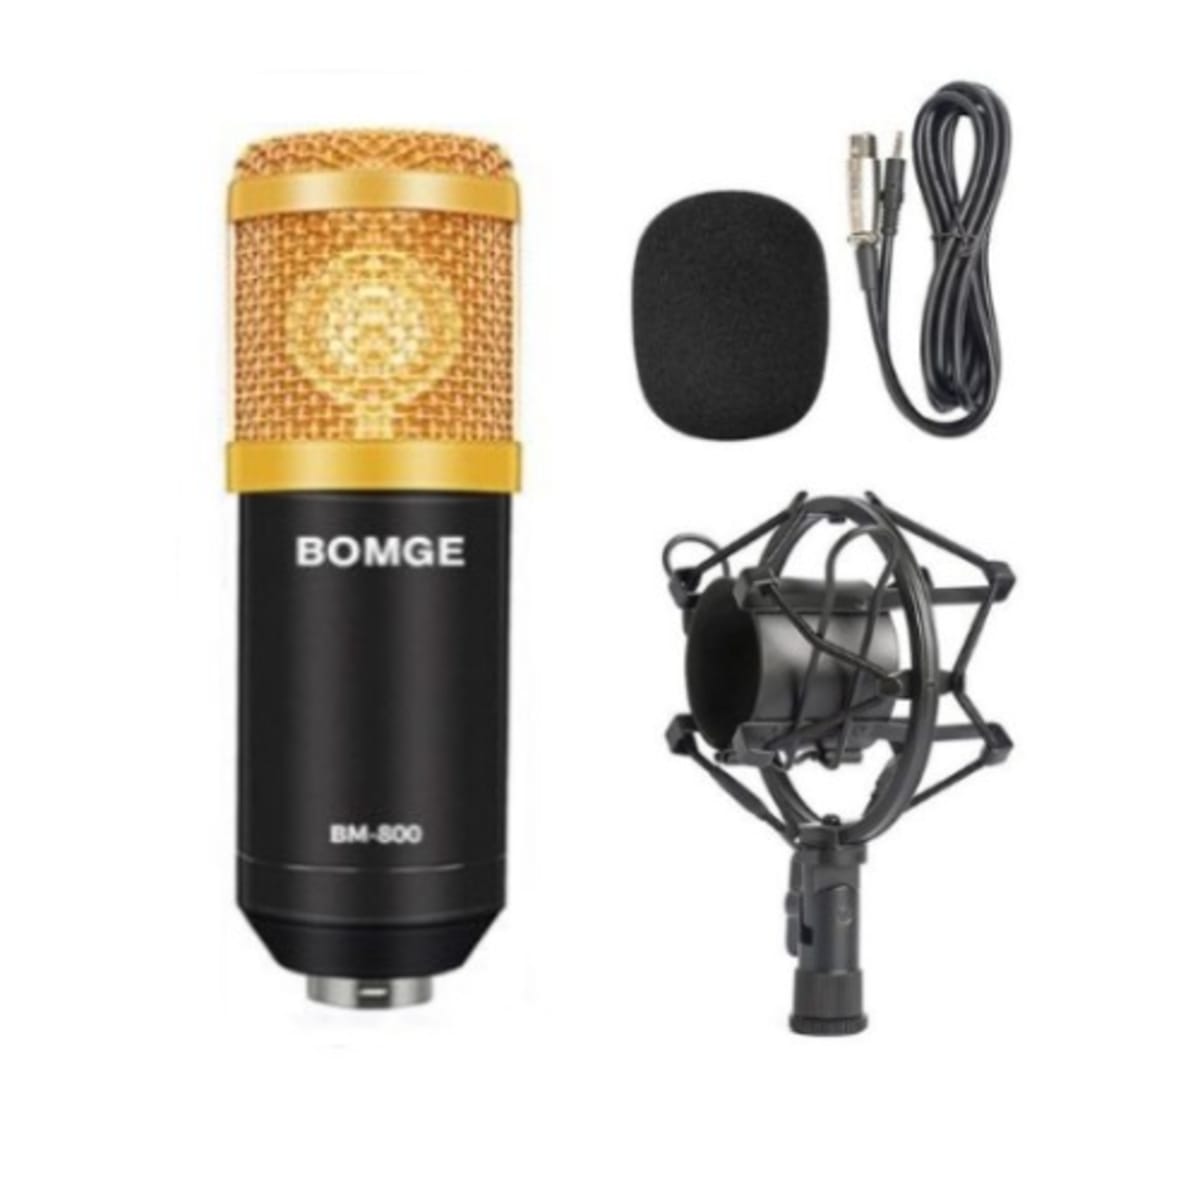 bm-800 microphone BM-800 Professional Studio Broadcasting